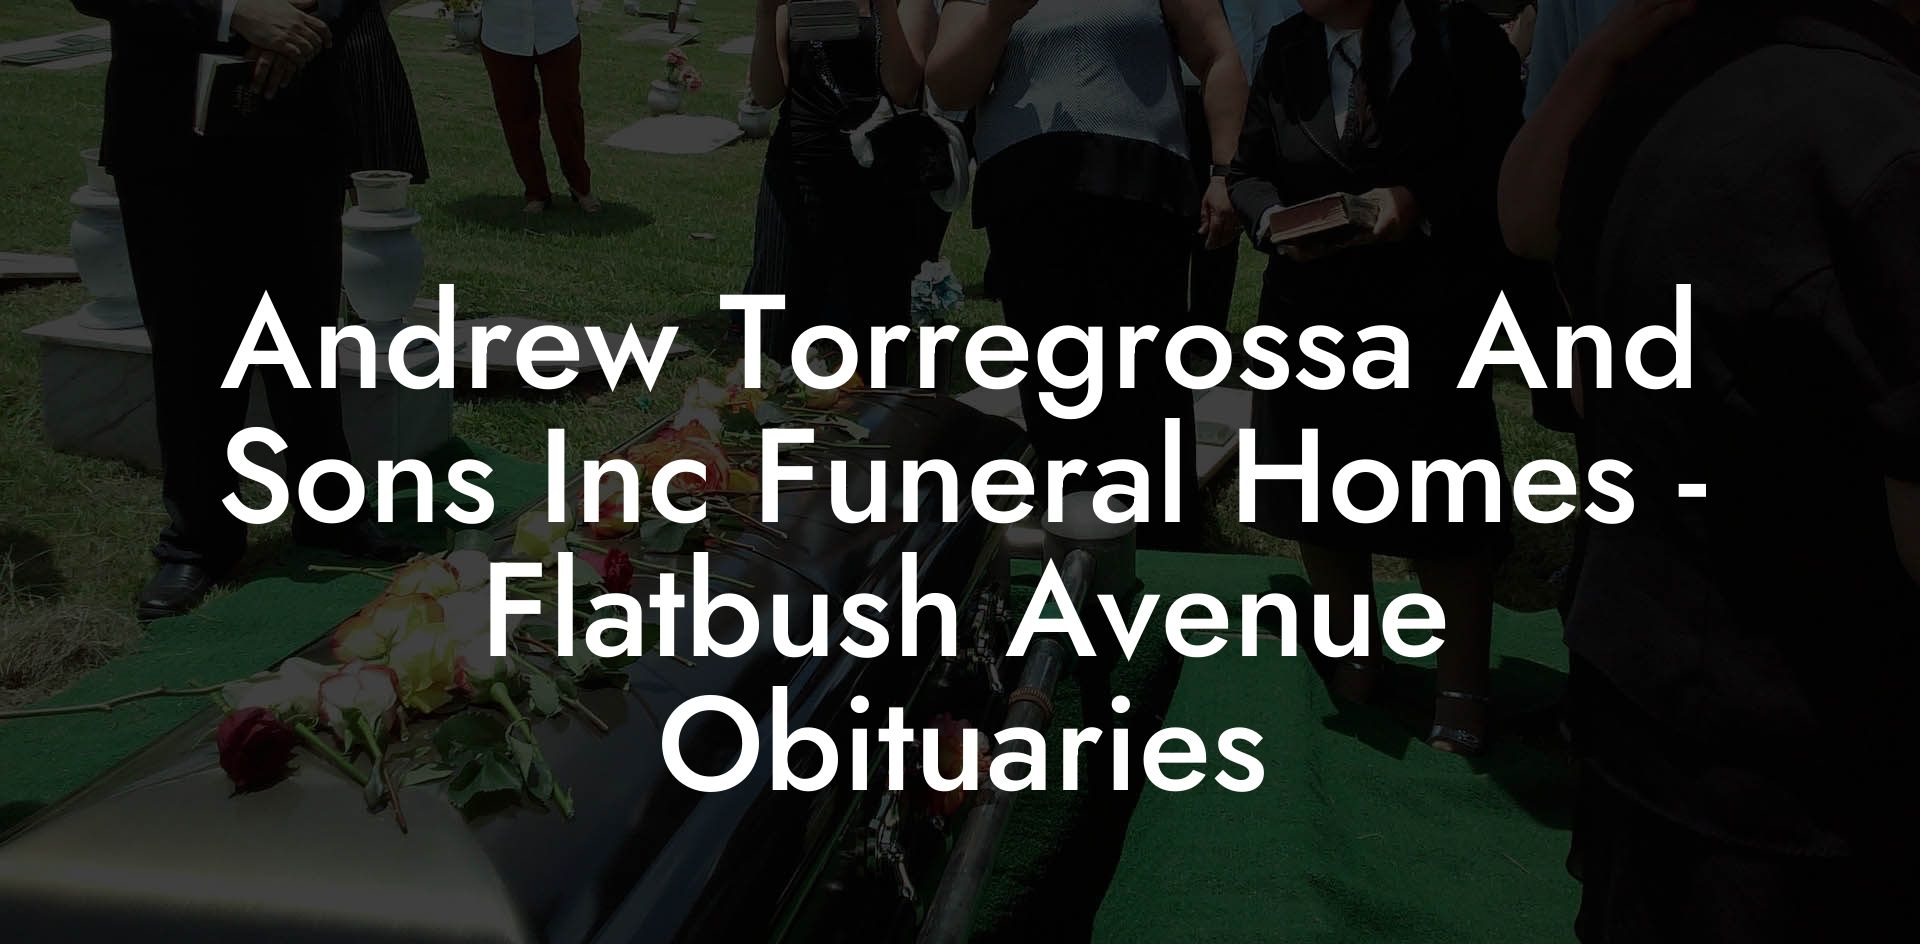 Andrew Torregrossa And Sons Inc Funeral Homes - Flatbush Avenue Obituaries